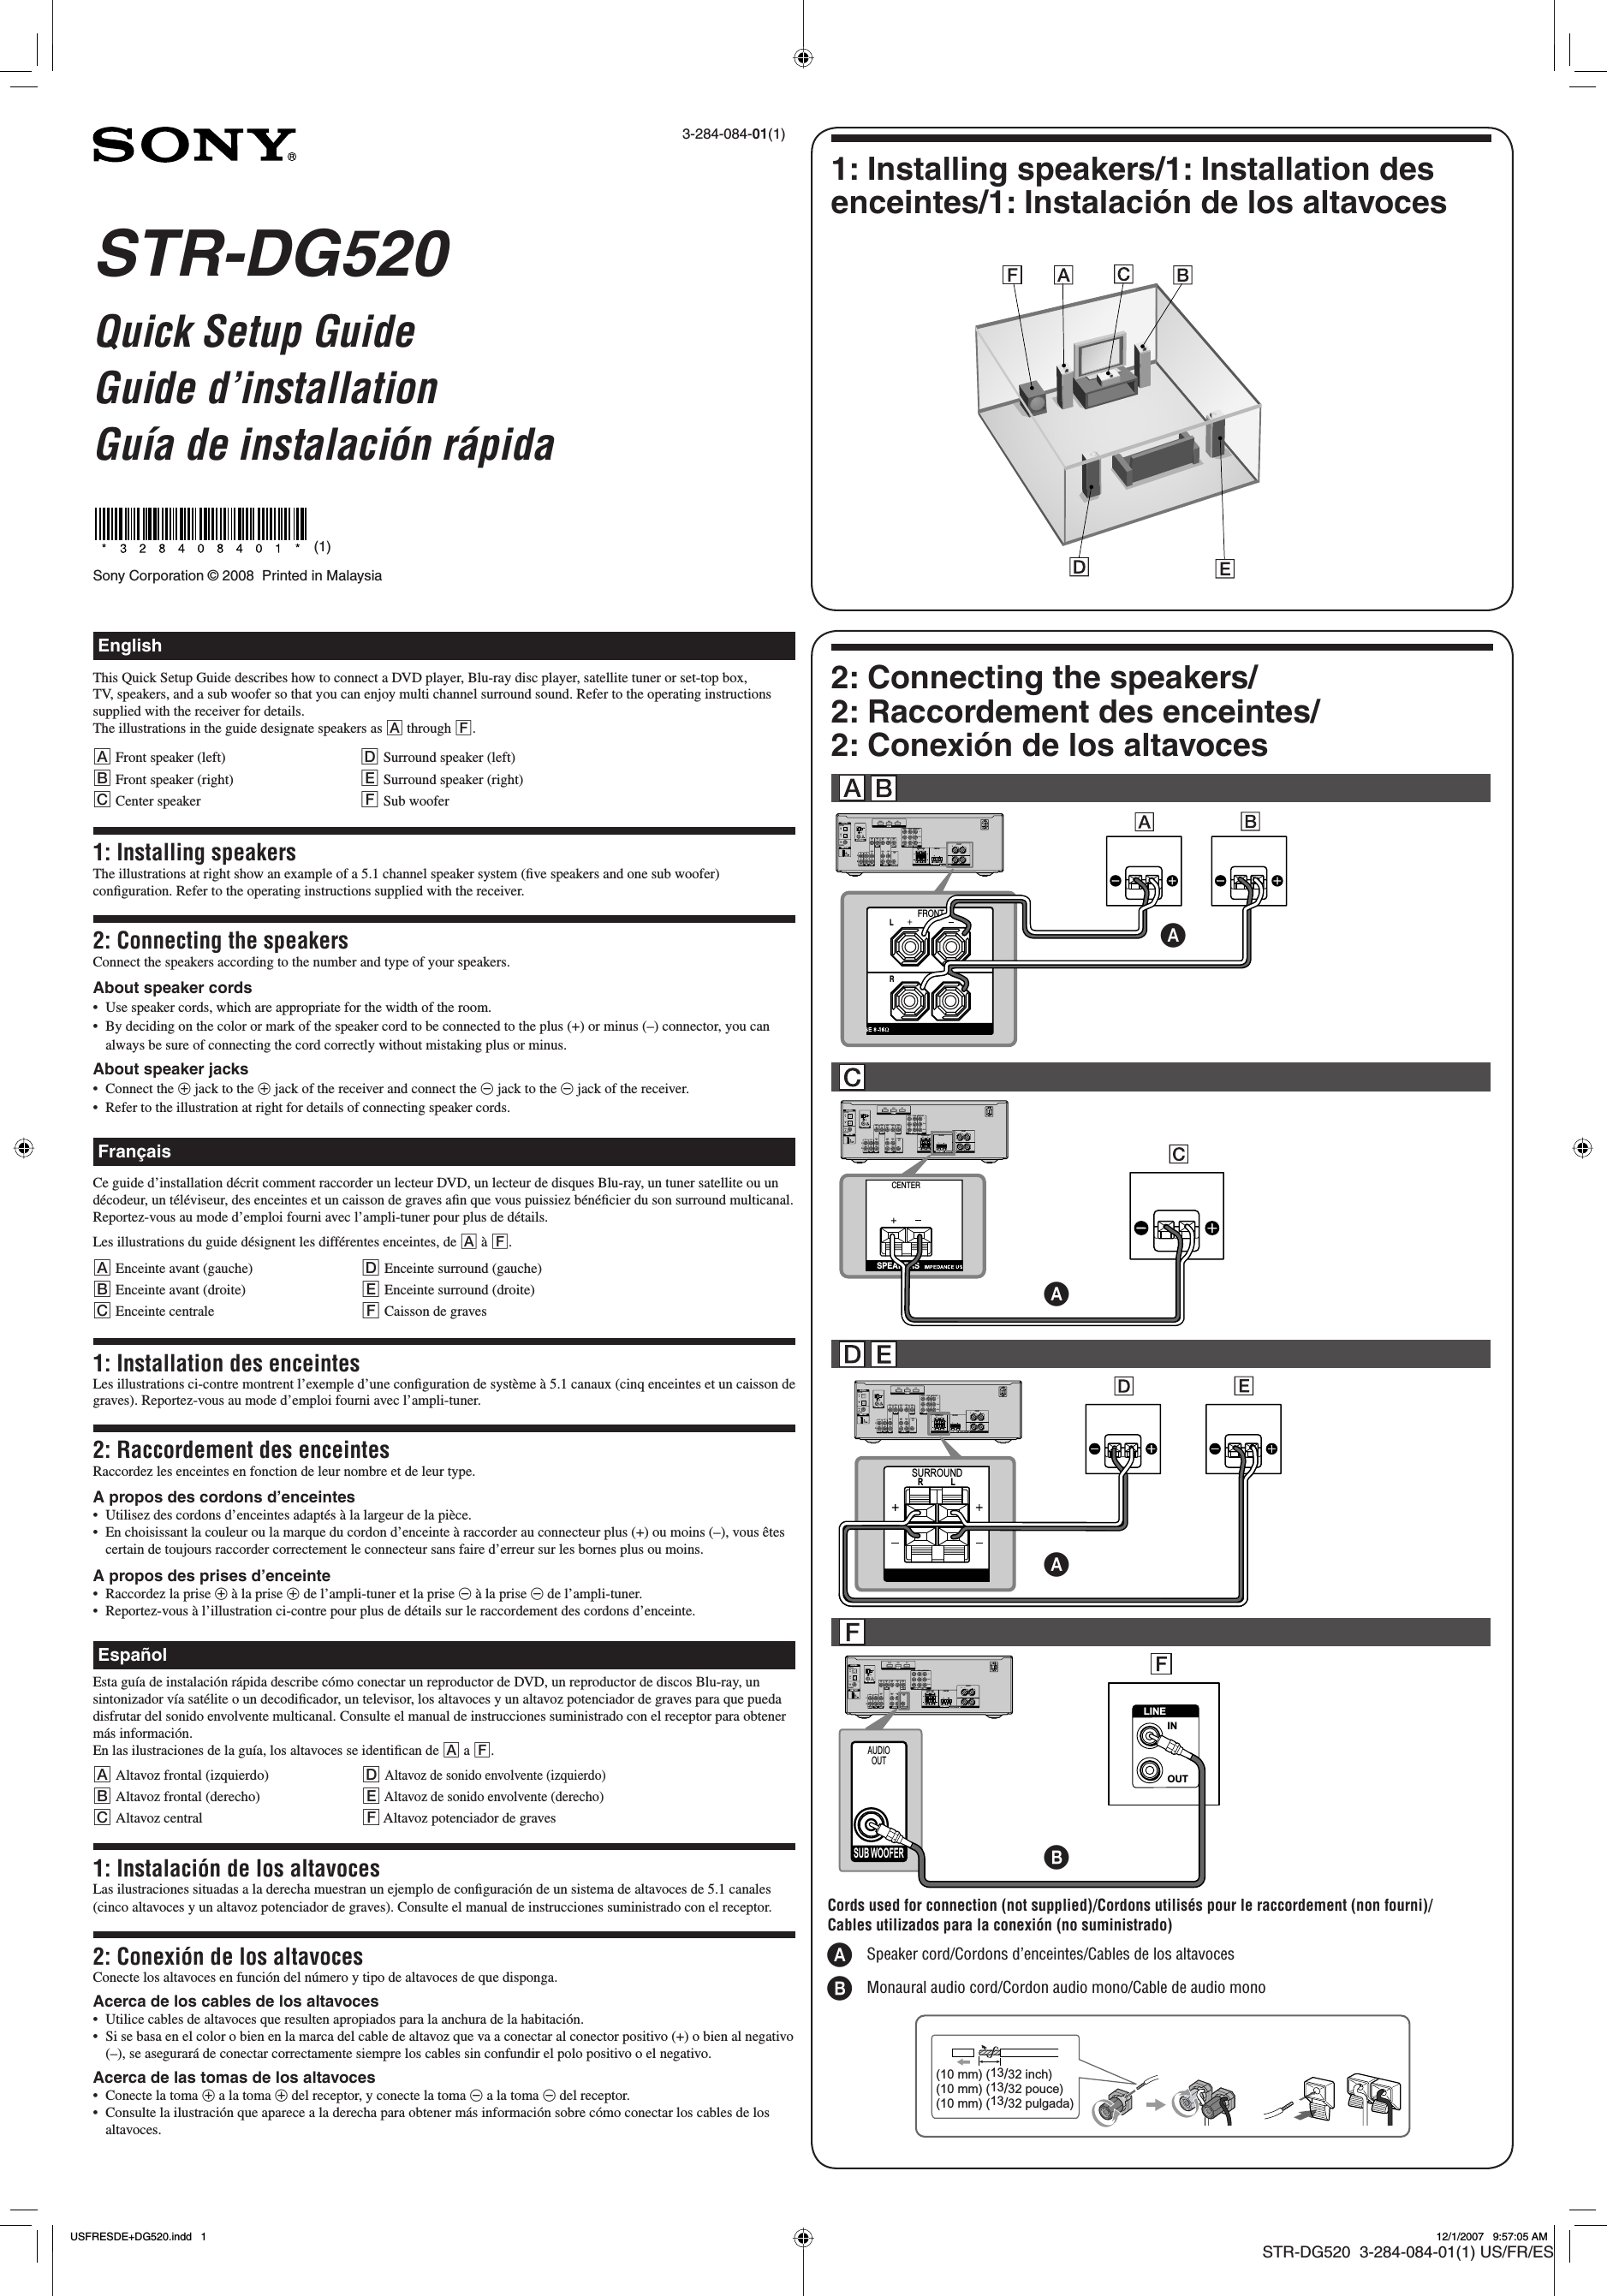 Page 1 of 2 - Sony STR-DG520 User Manual Quick Start Guide STRDG520 Qsg